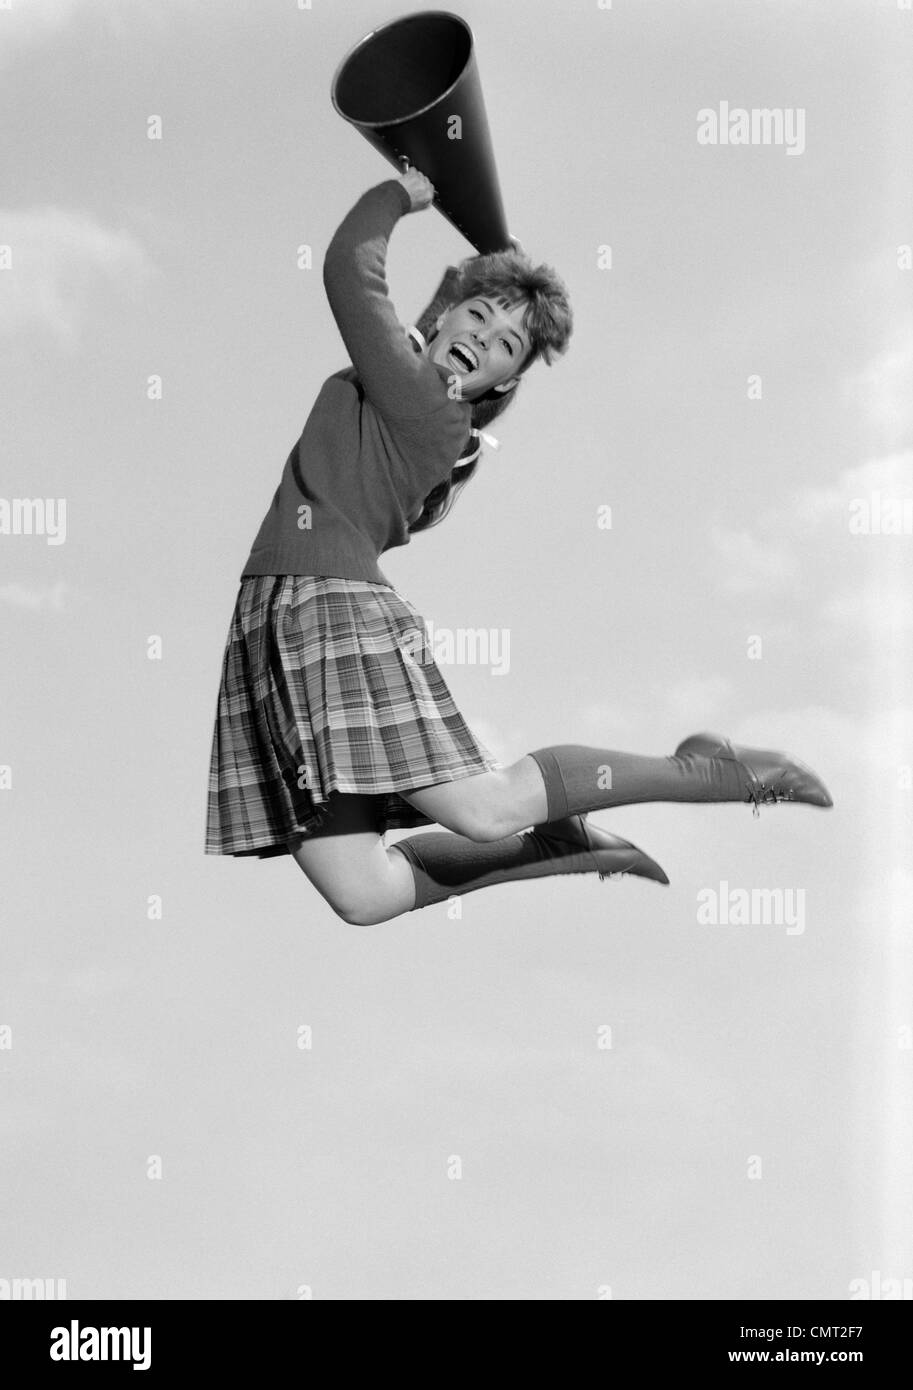 1960 ADOLESCENTE CHEERLEADER CHEERING SAUTER DANS L'AIR HOLDING MEGAPHONE LOOKING AT CAMERA Banque D'Images